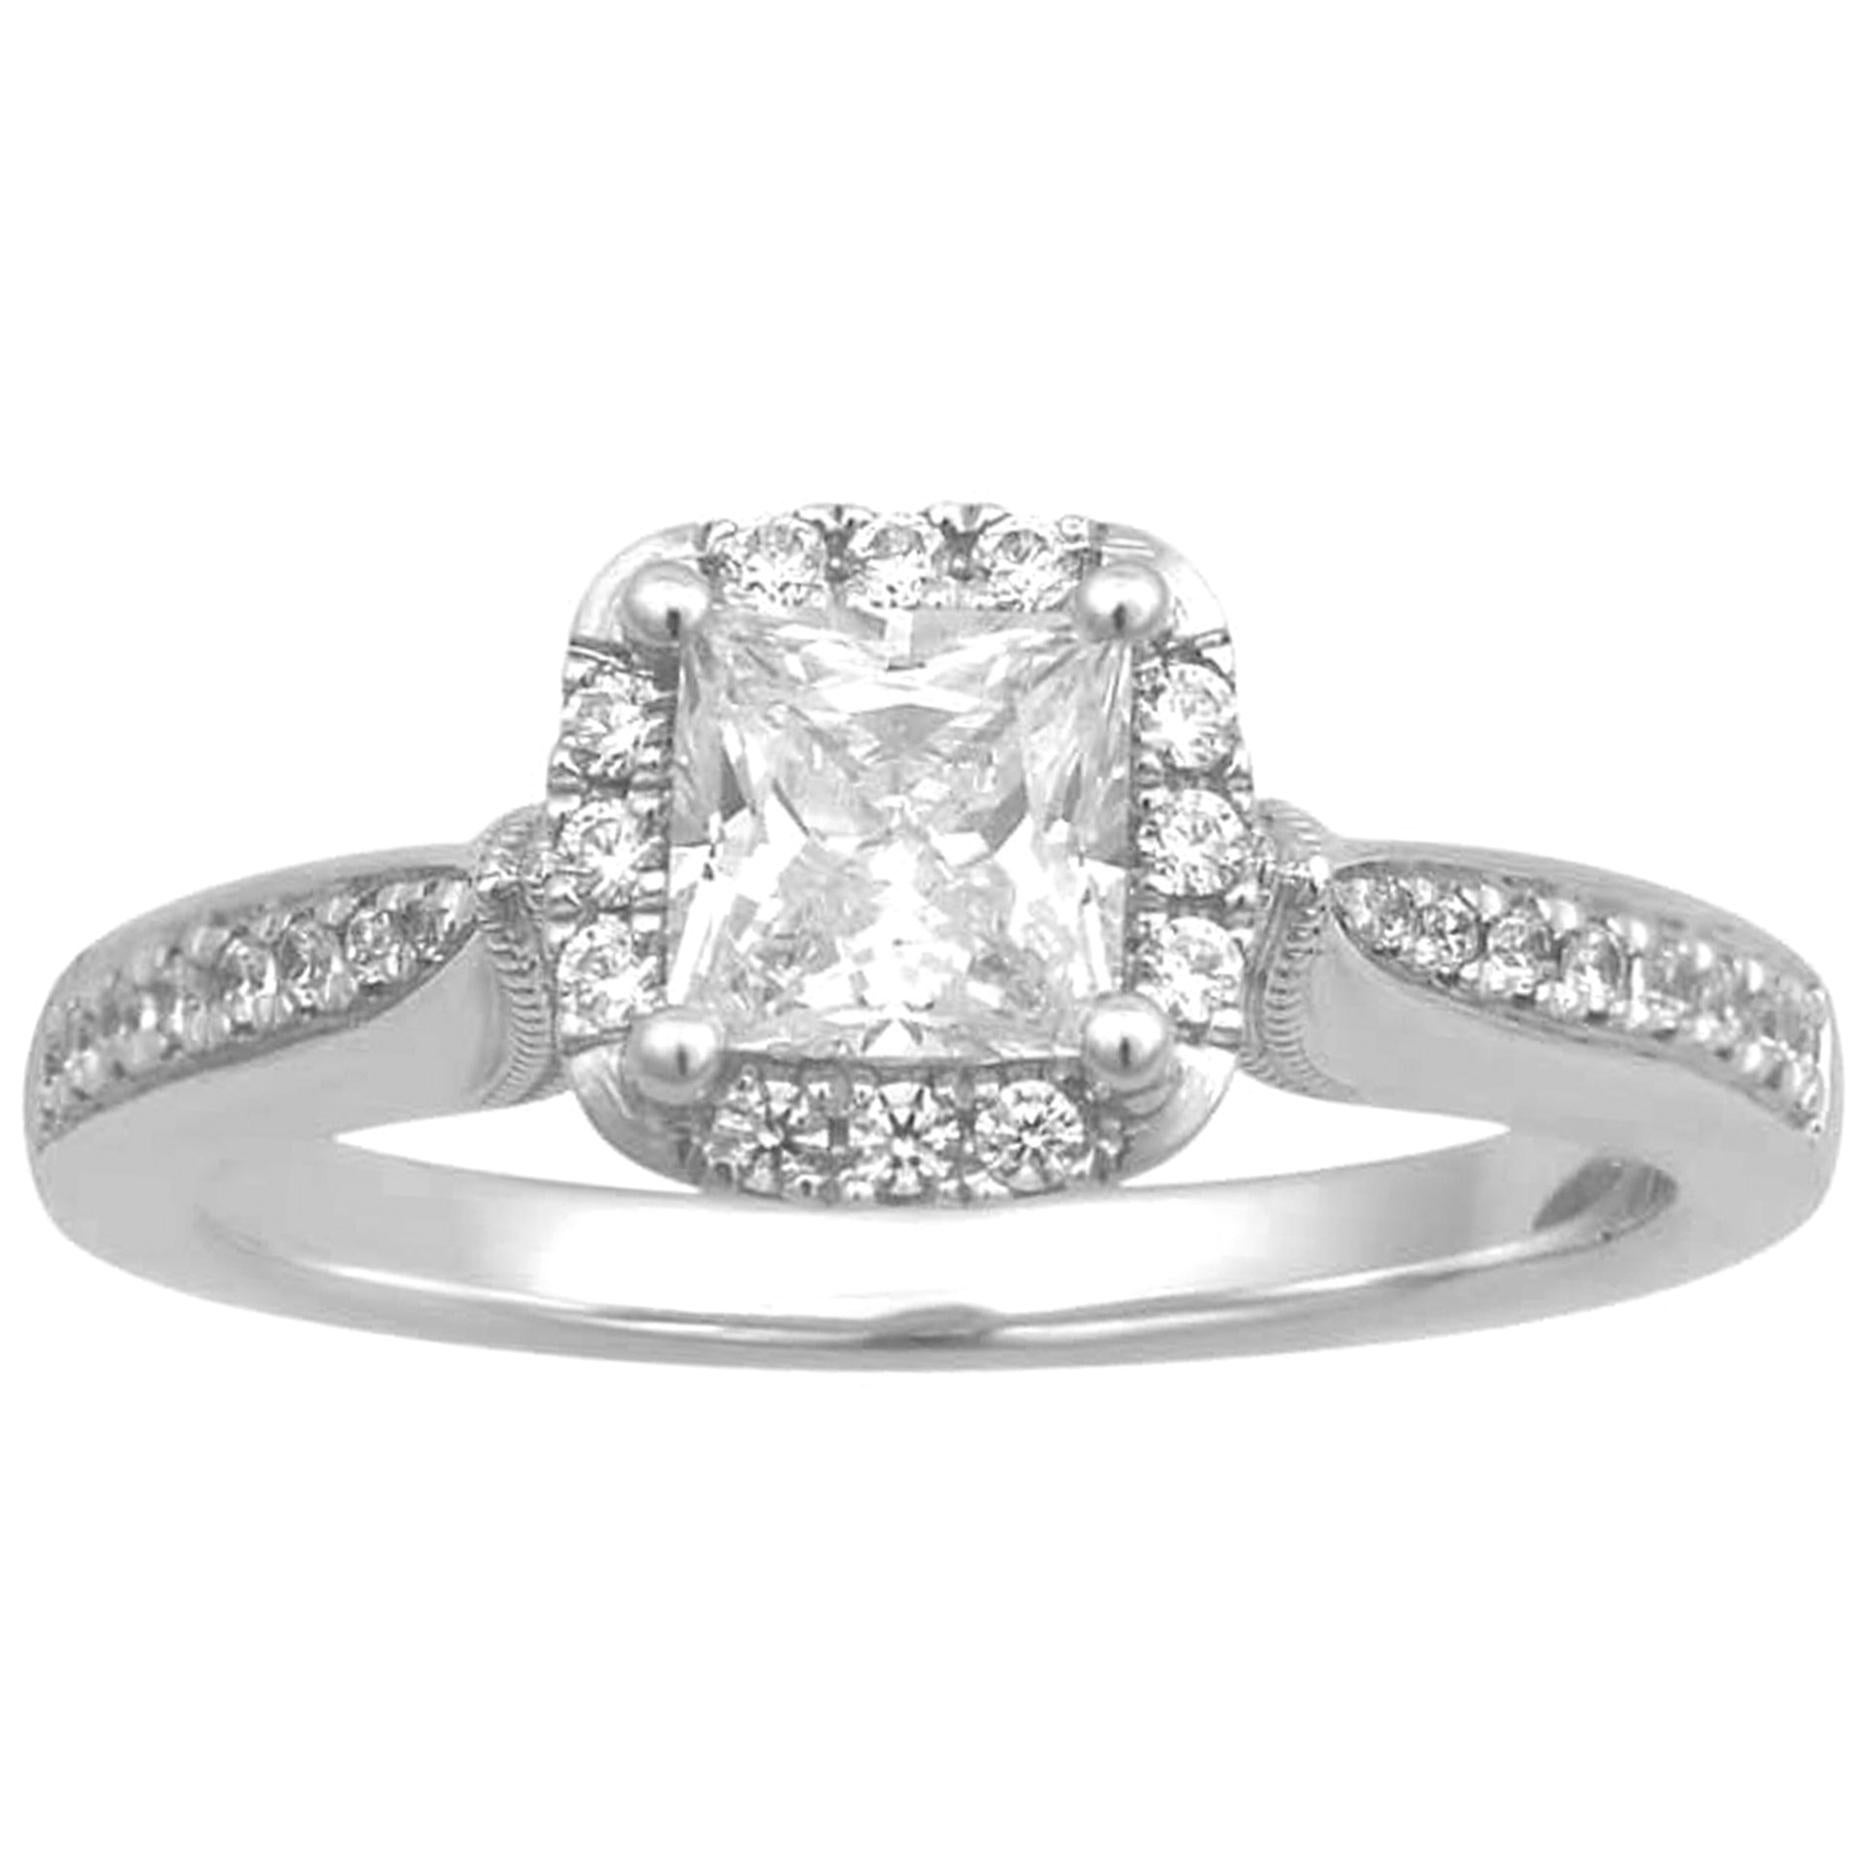 TJD 1.0 Carat Round & Princess Cut Diamond 18KT White Gold Halo Engagement Ring